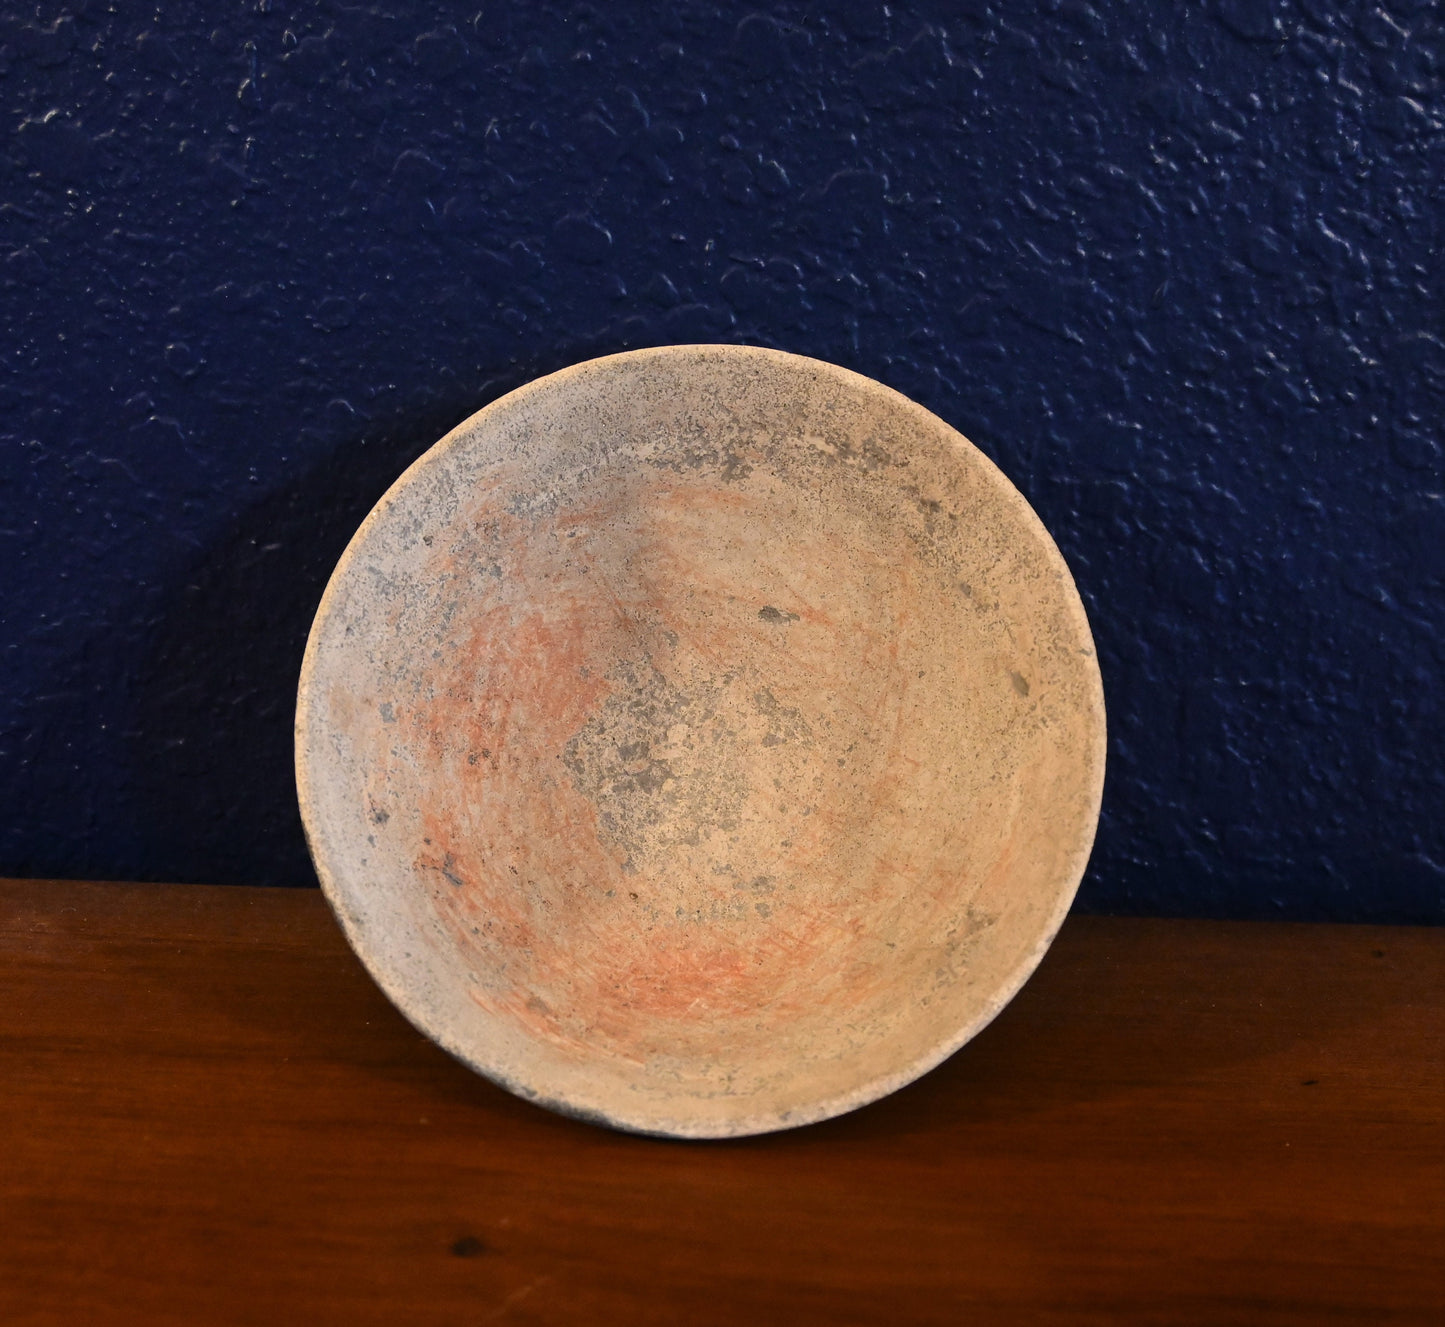 Authentic pre-Columbian Bowl Ecuador La Tolita Tumoco Pottery Bowl c. 600 BC - 200 AD Certificate of Authenticity & provenance -great gift